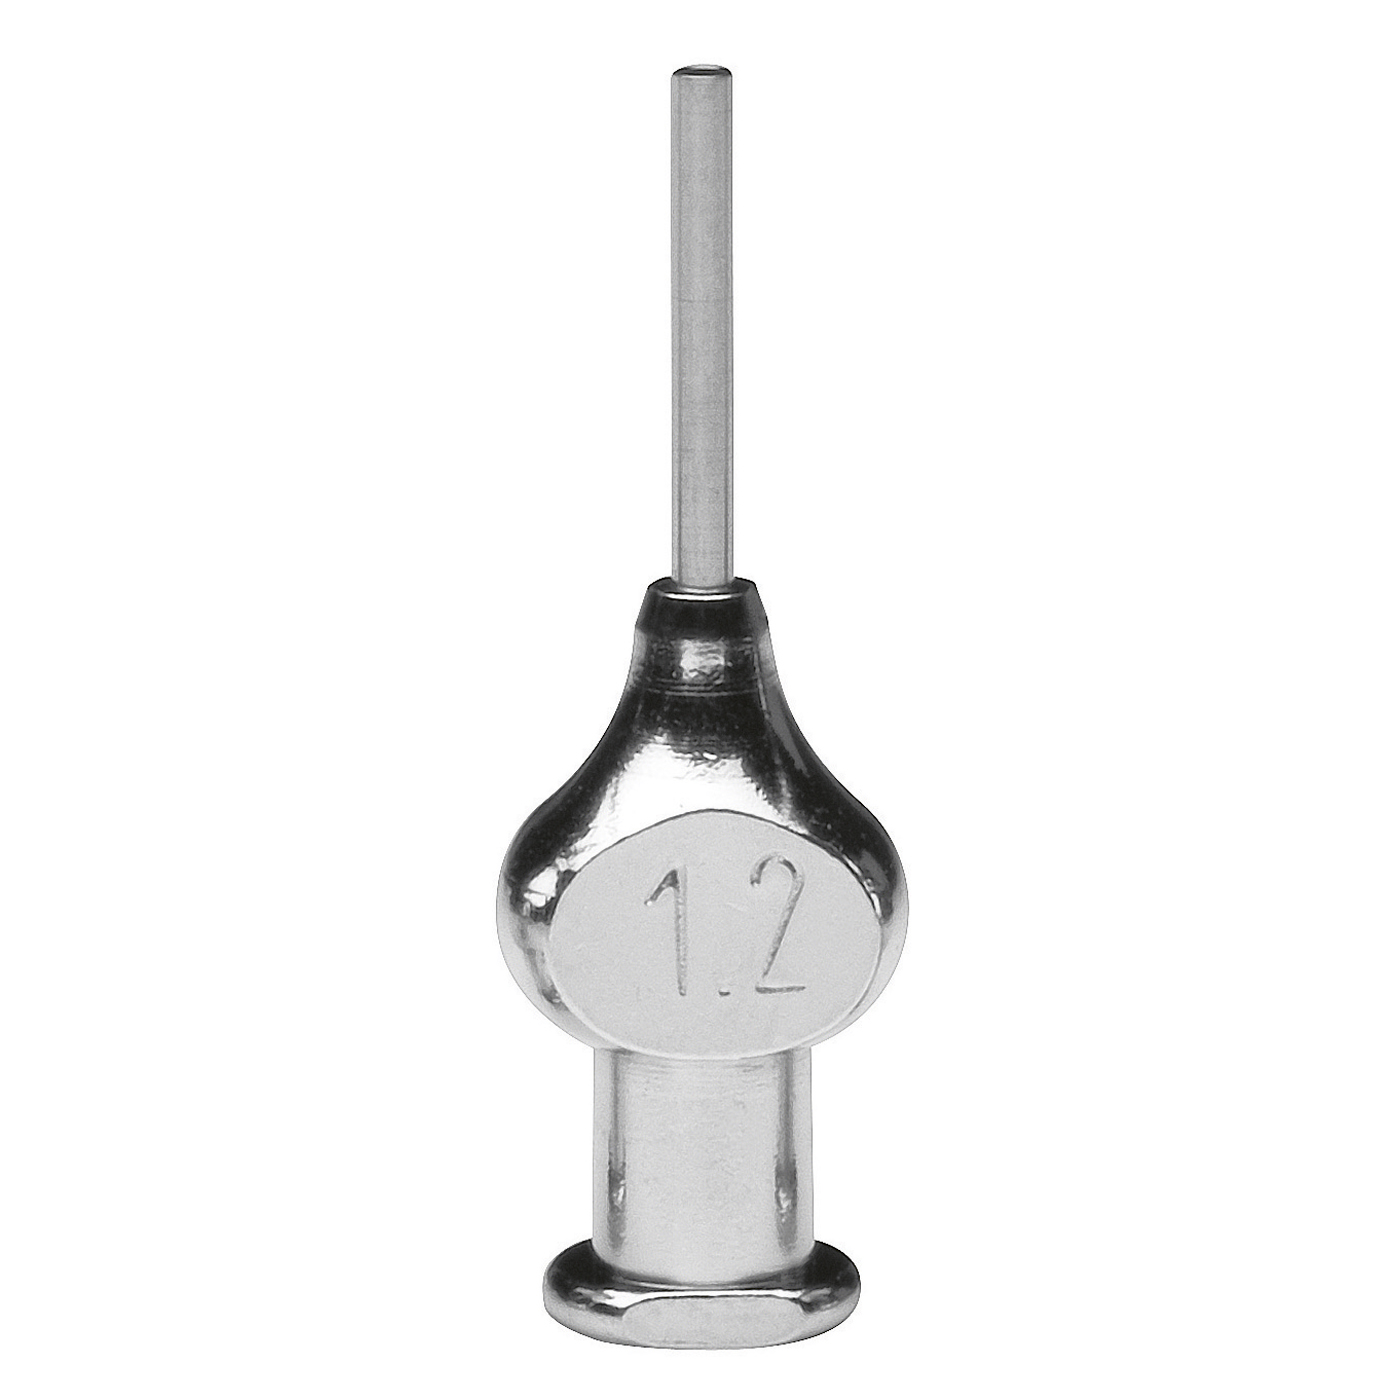 microflame burner nozzles, ø 1.2 x 10 mm (G18) - 5 pieces